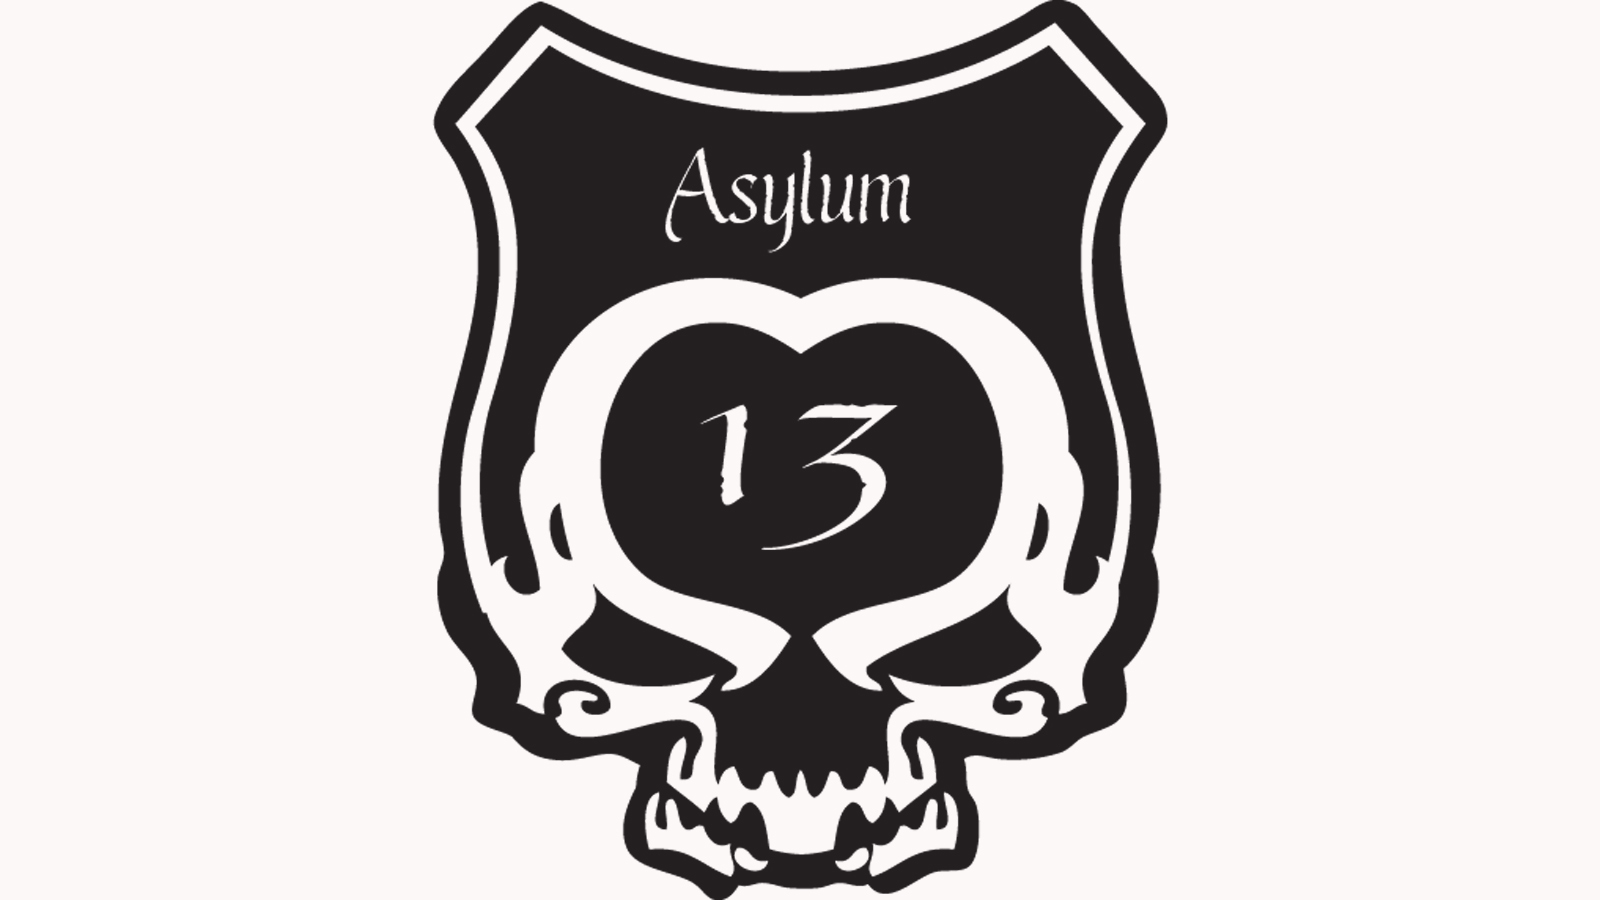 Asylum 13 Nicaragua